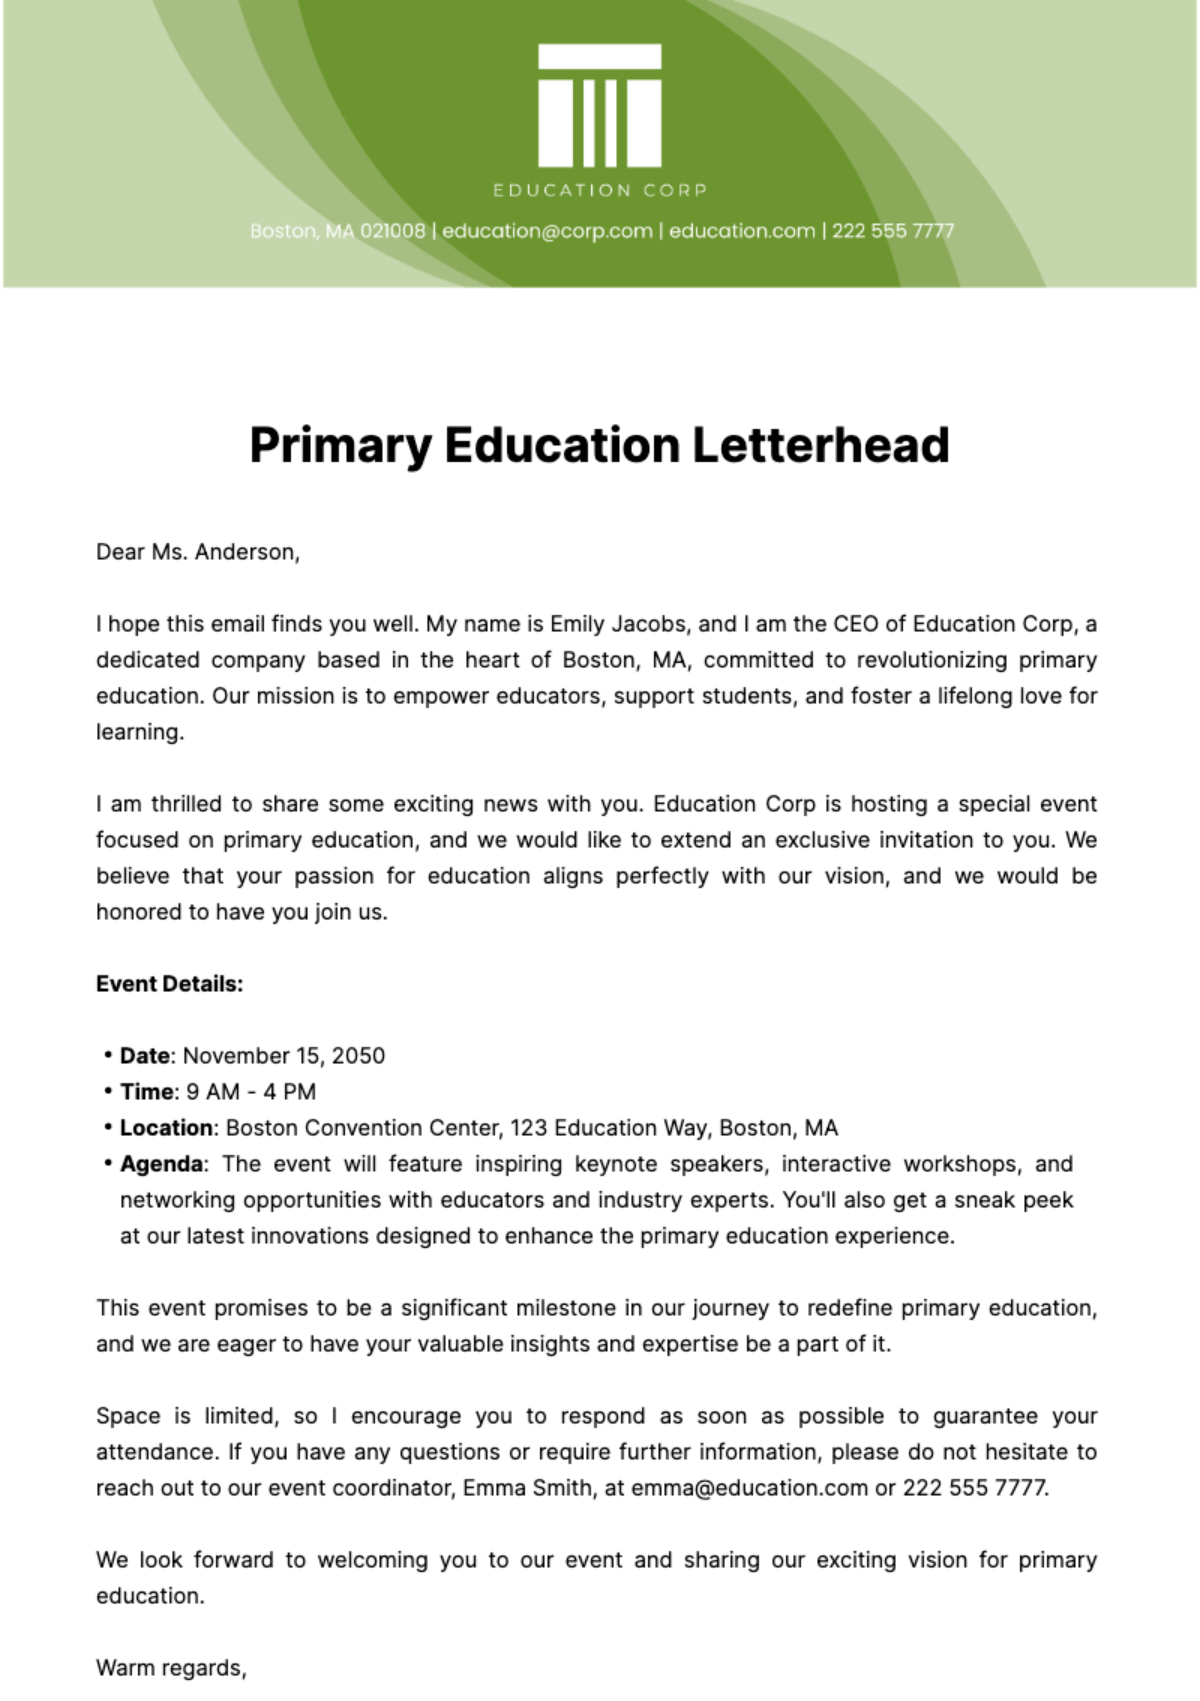 Free Primary Education Letterhead Template